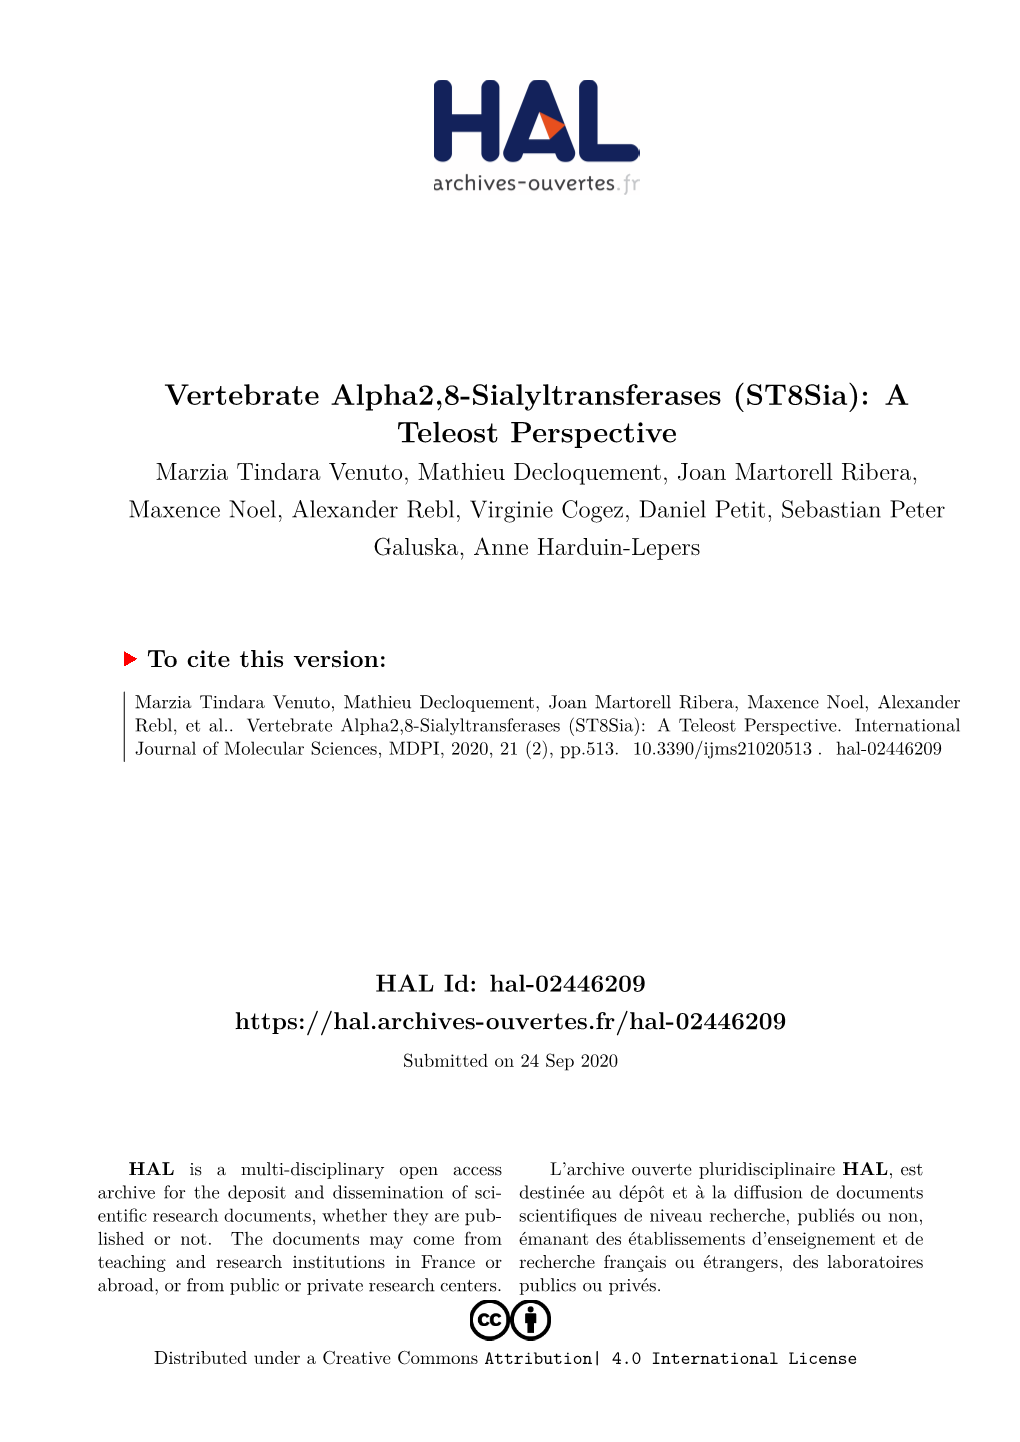 Vertebrate Alpha2,8-Sialyltransferases